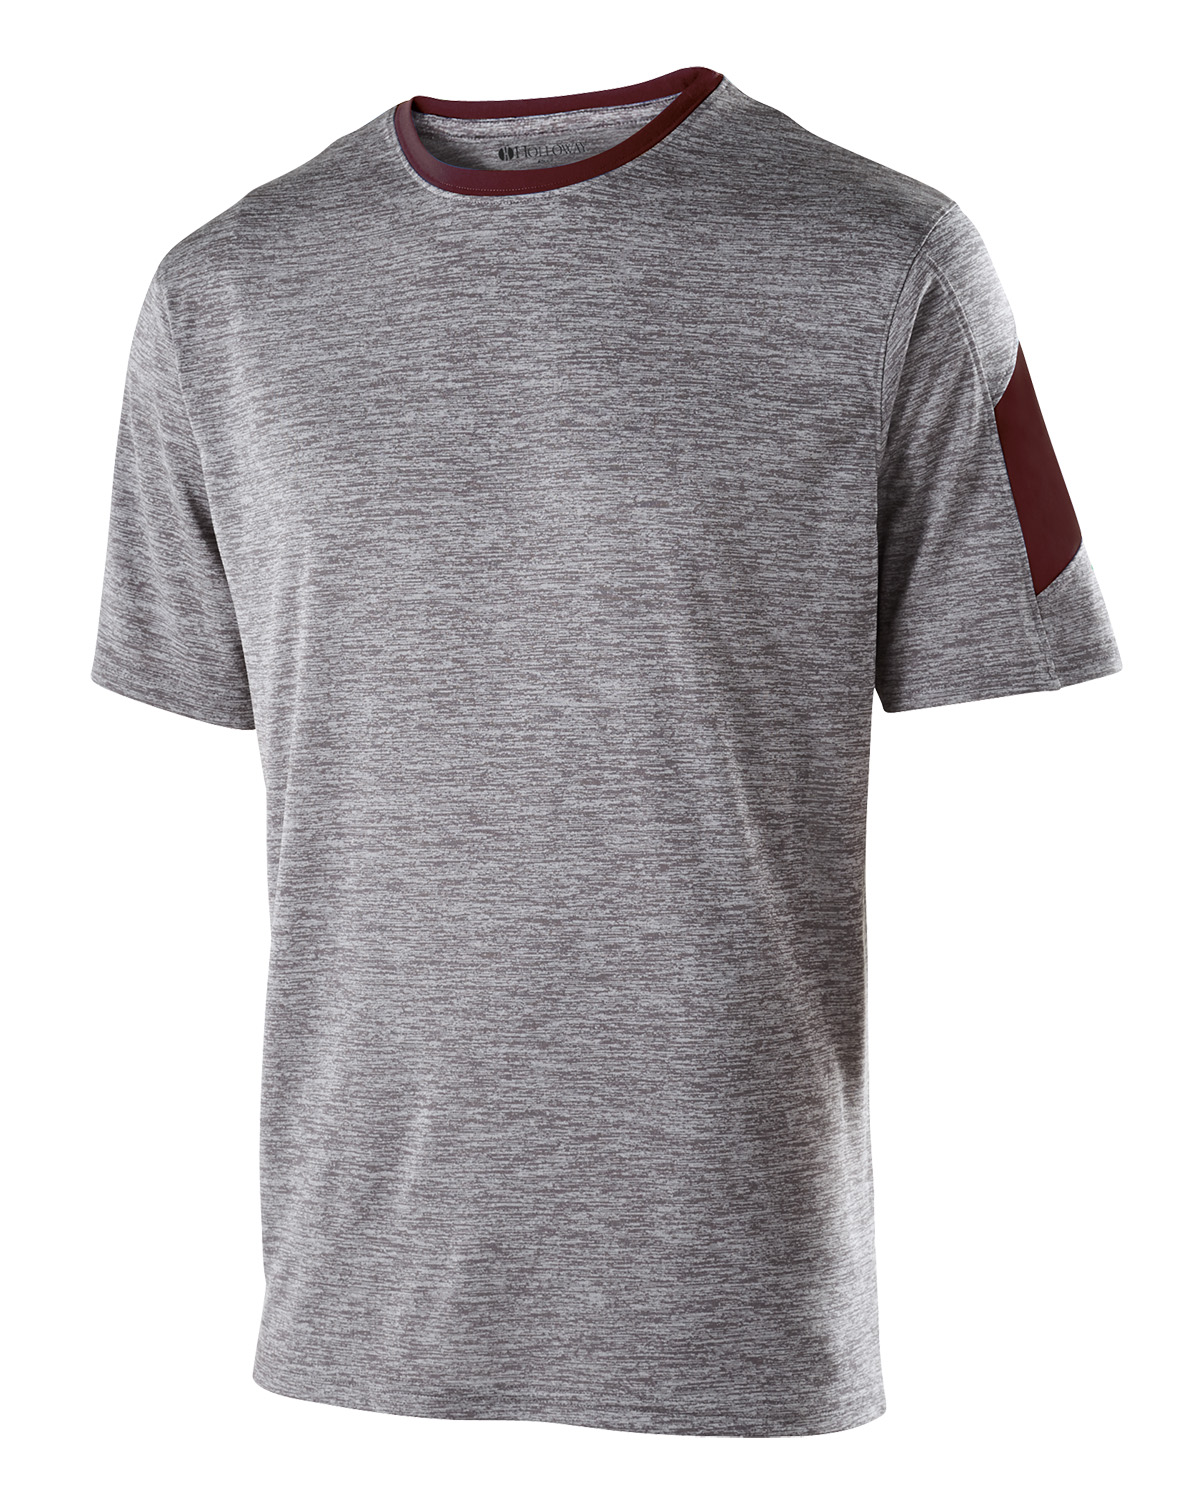 Holloway 222526 - Adult Polyester Short Sleeve Electron Shirt